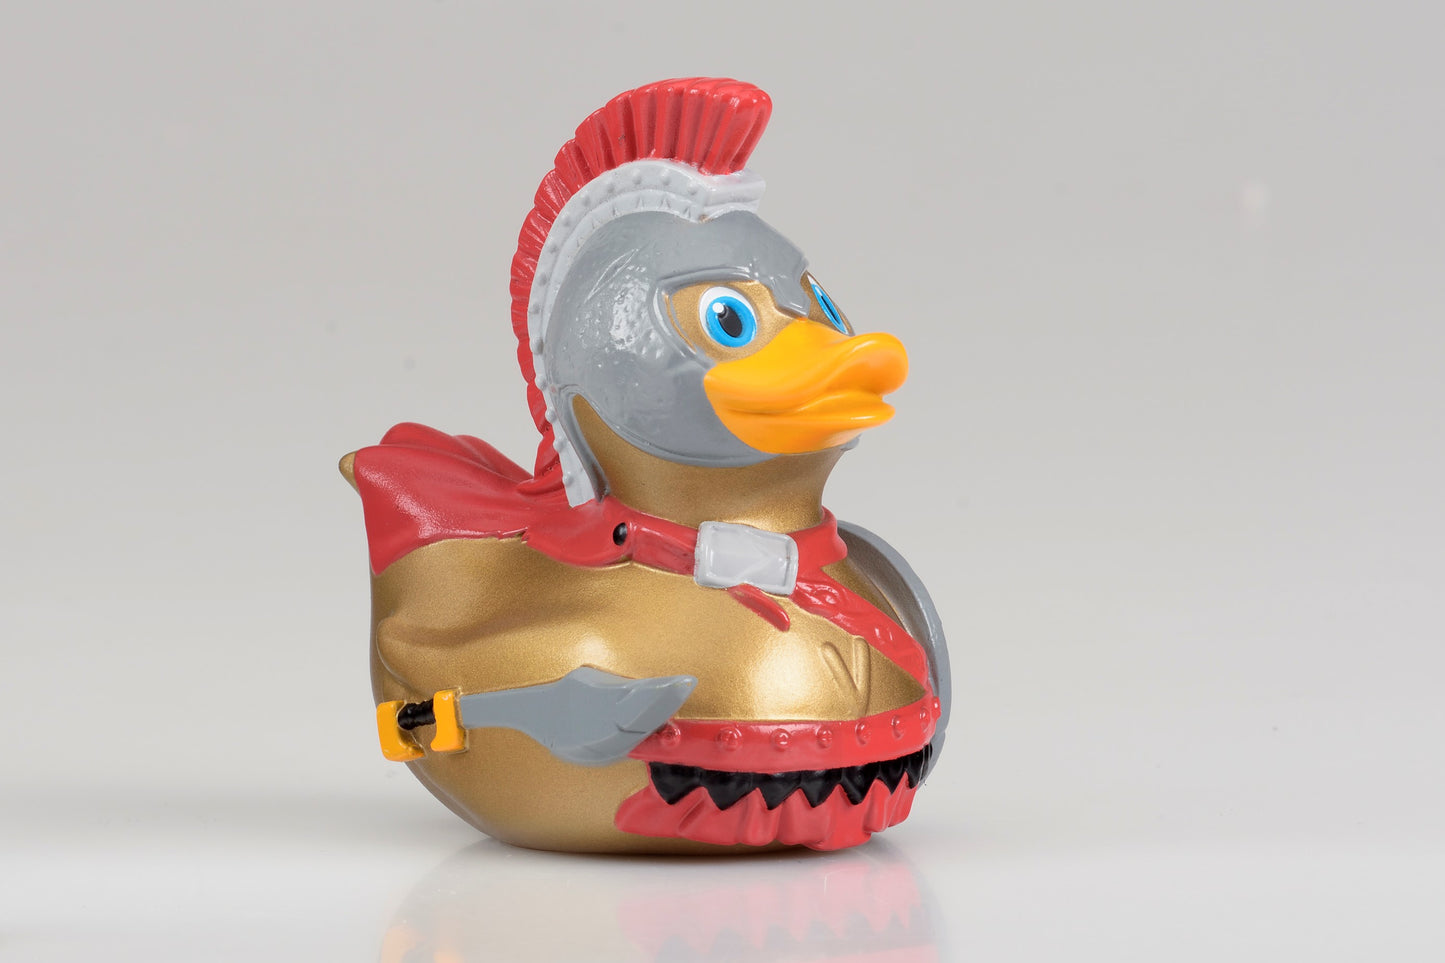 Leonidas Duck